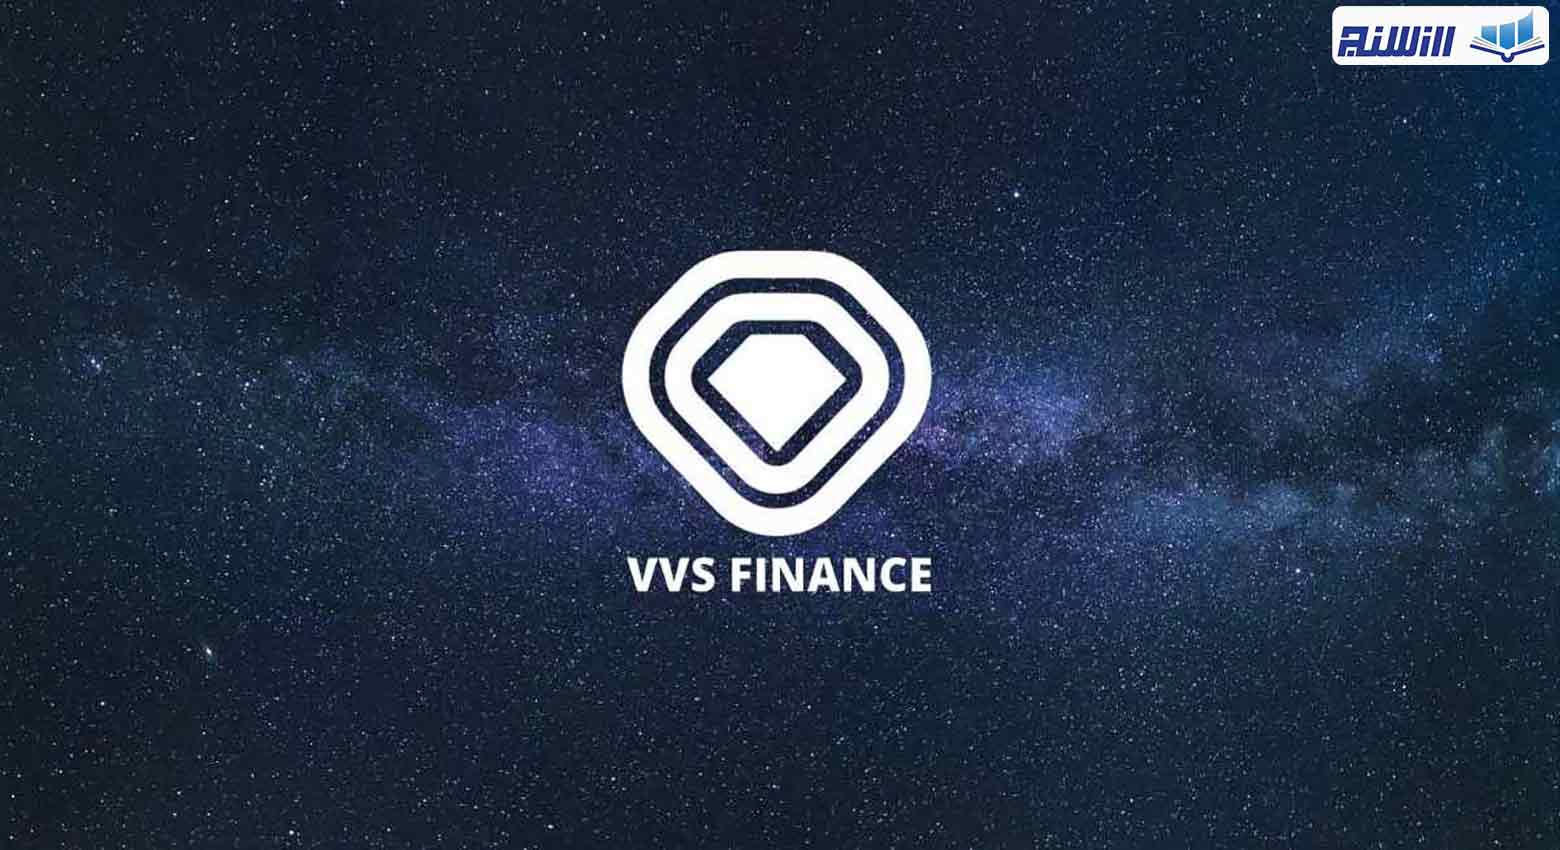 مزایای پلتفرم VVS Finance